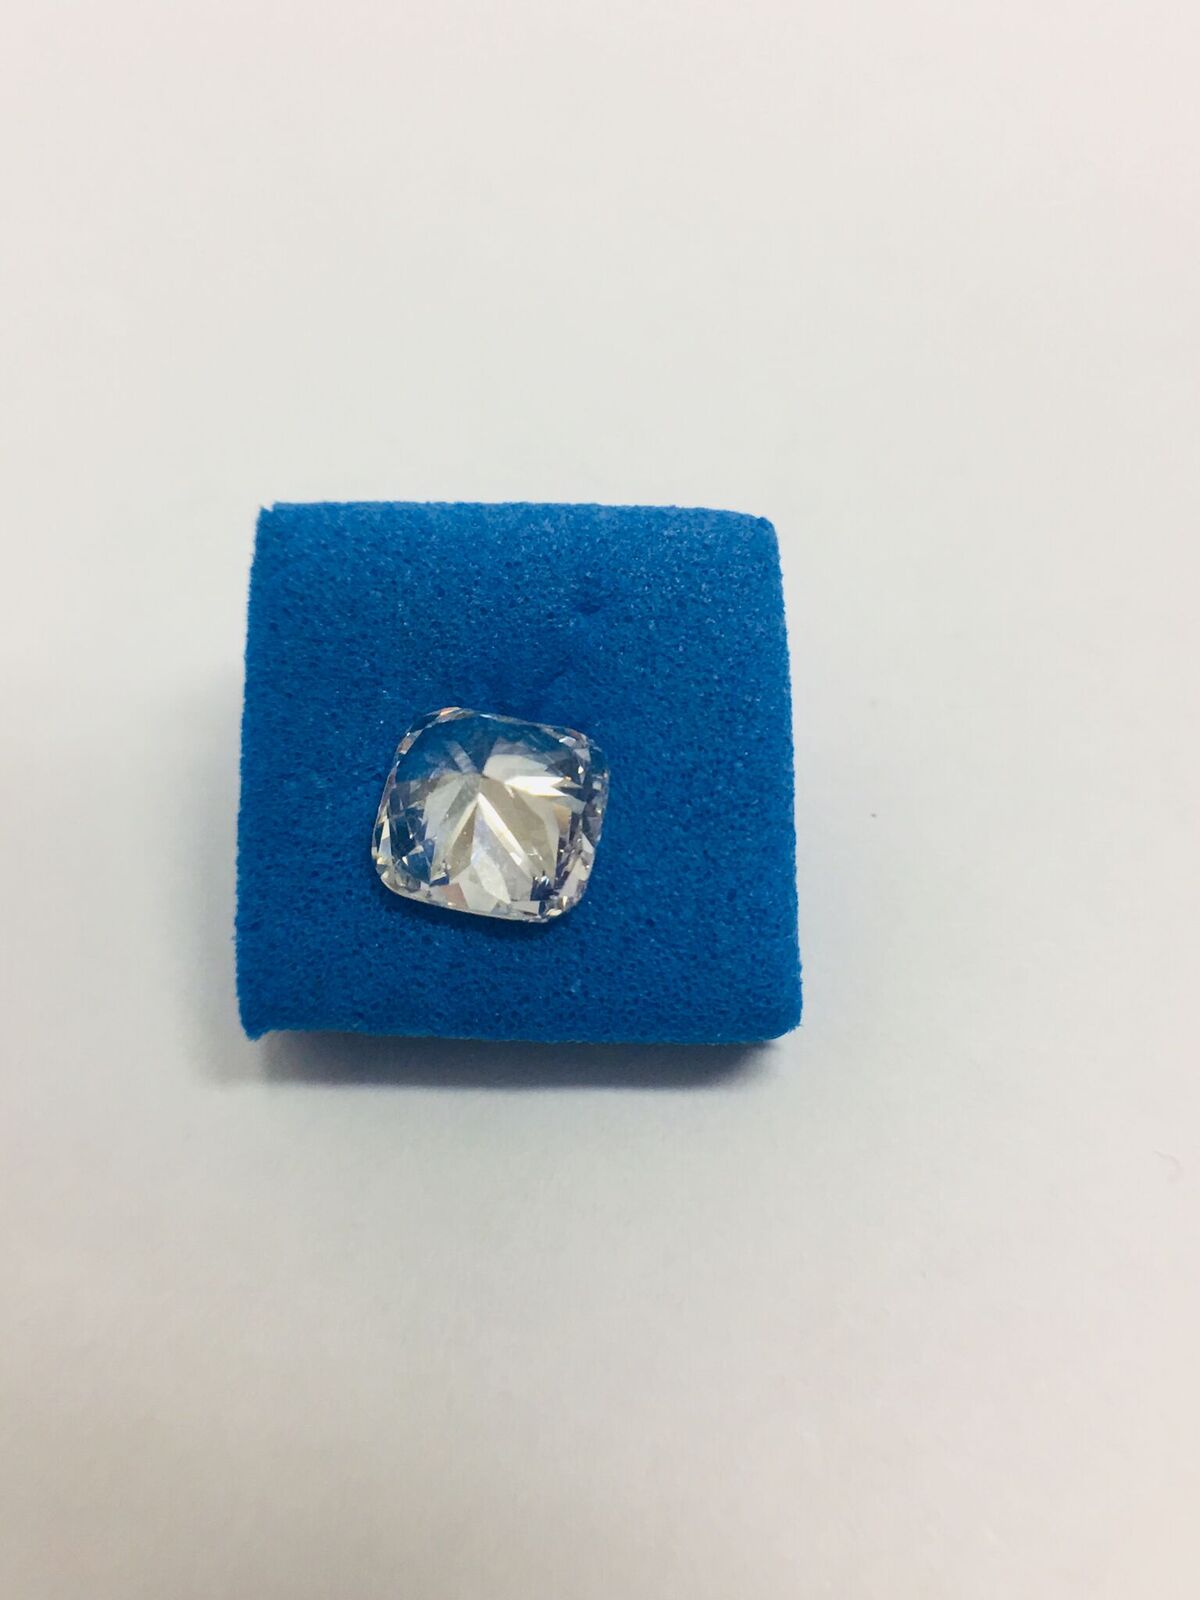 1.00ct cushion cut natural diamond - Image 11 of 14